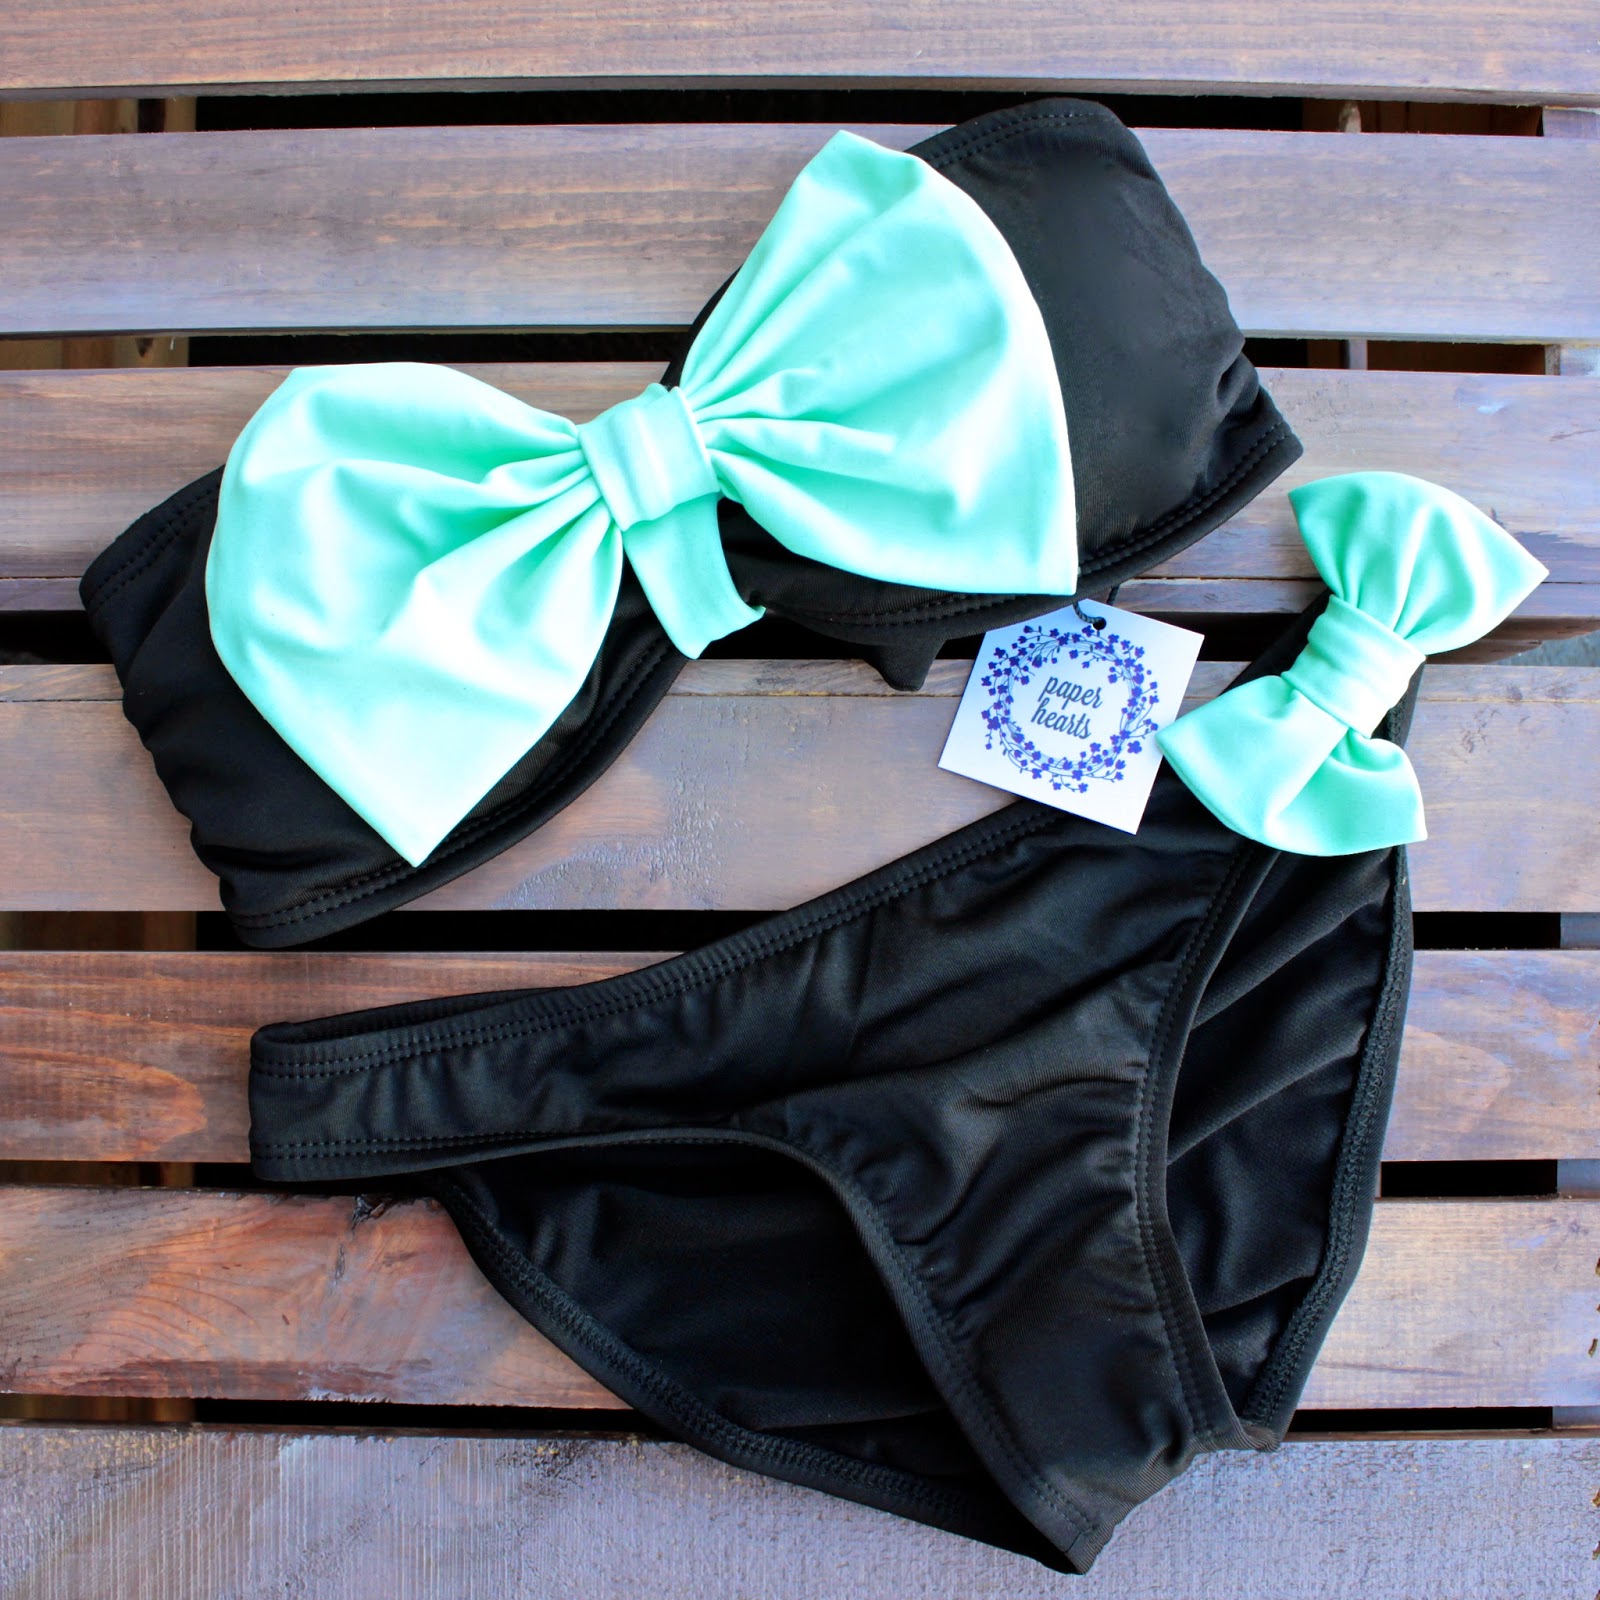 Aquamarine Attire: Bikinis and Bows